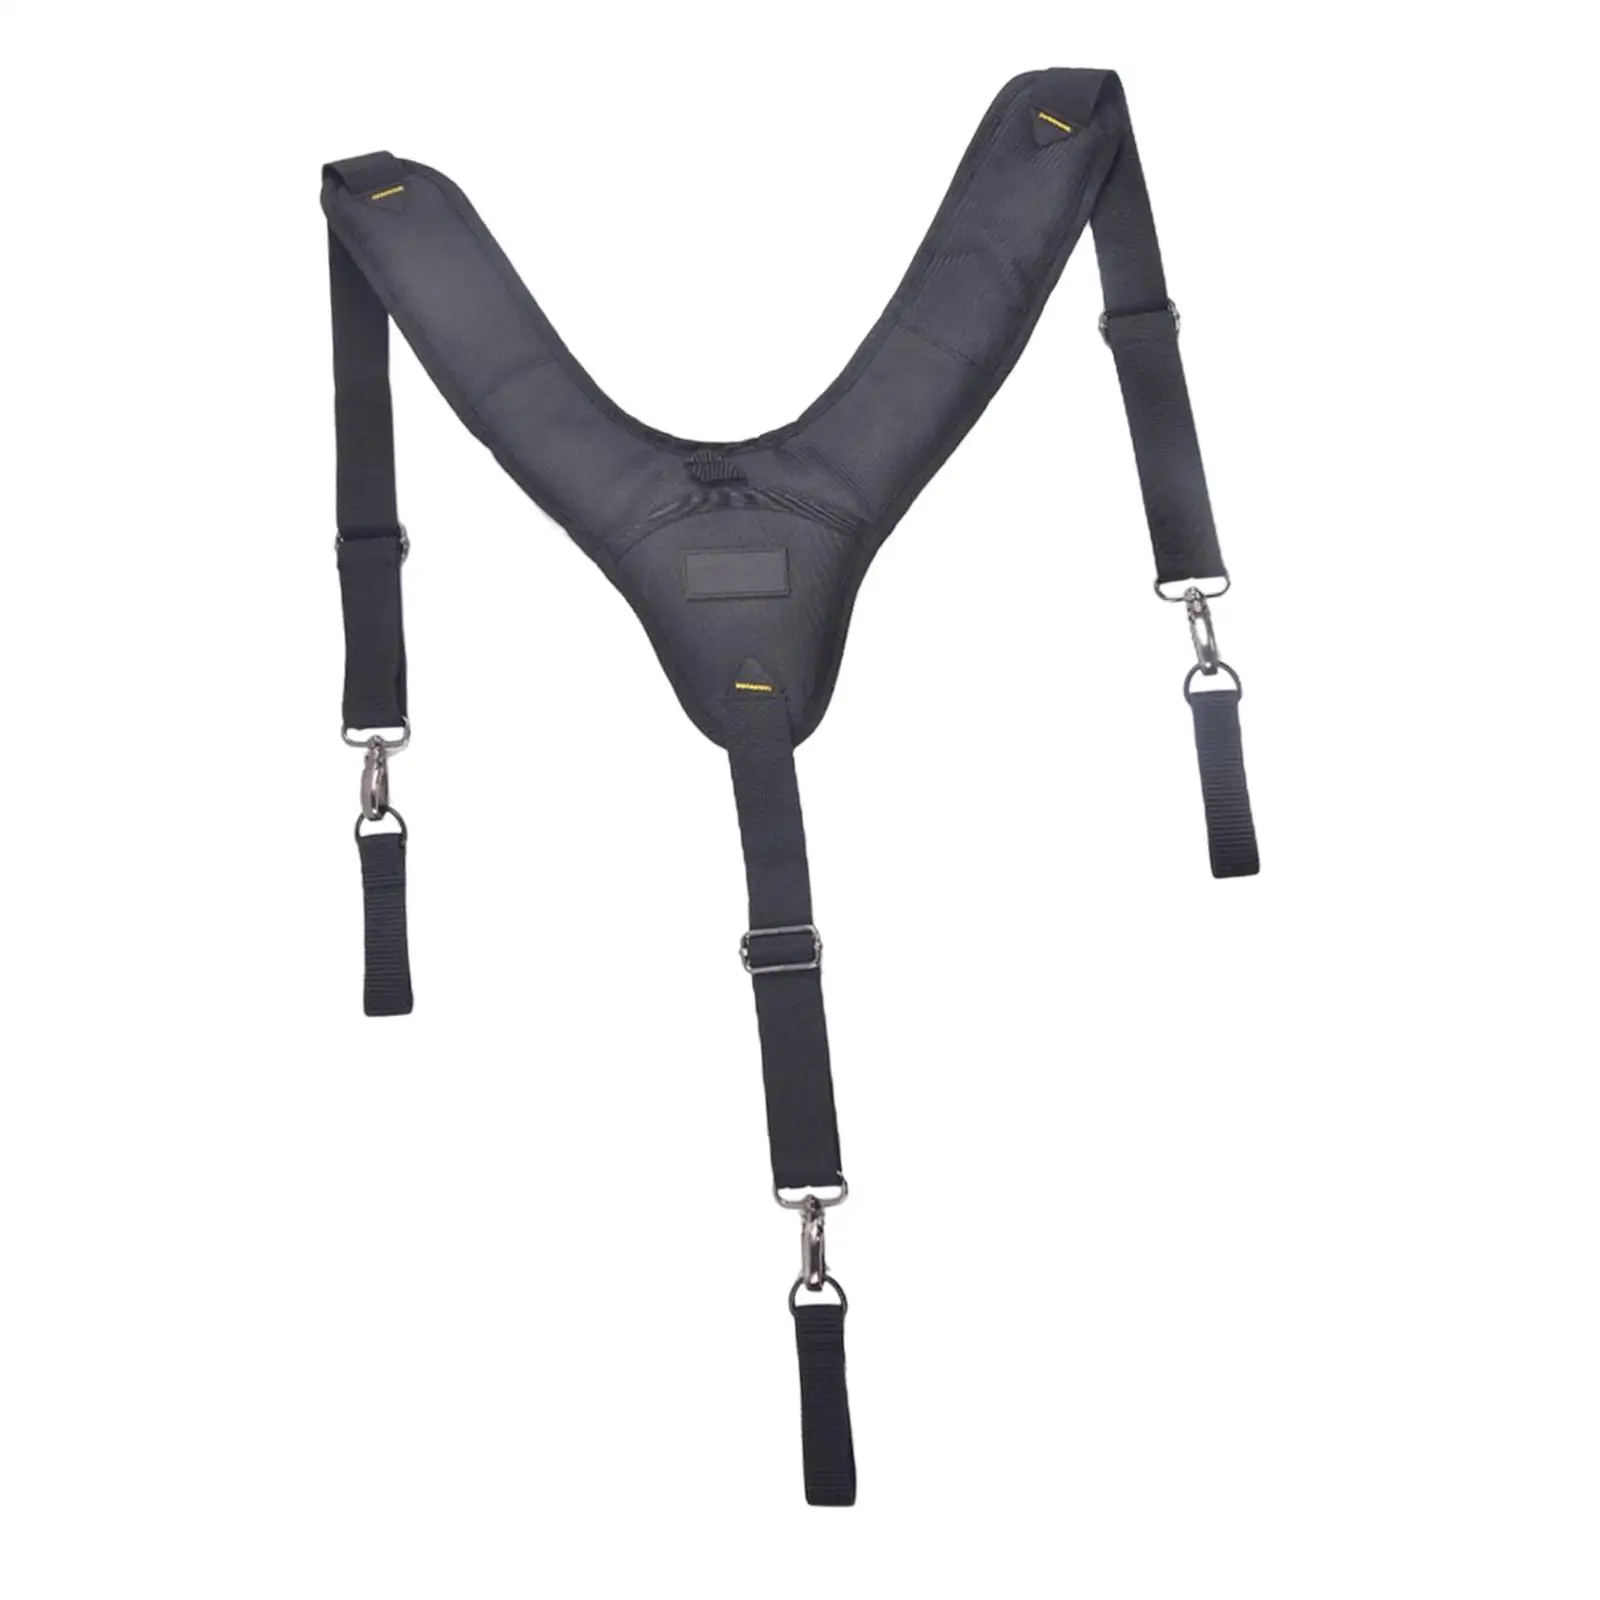 Tool Belt Suspenders Classic 3 Loops Construction Tools Black Adjustable Shoulder Straps Work Suspenders for Work Suspension Rig